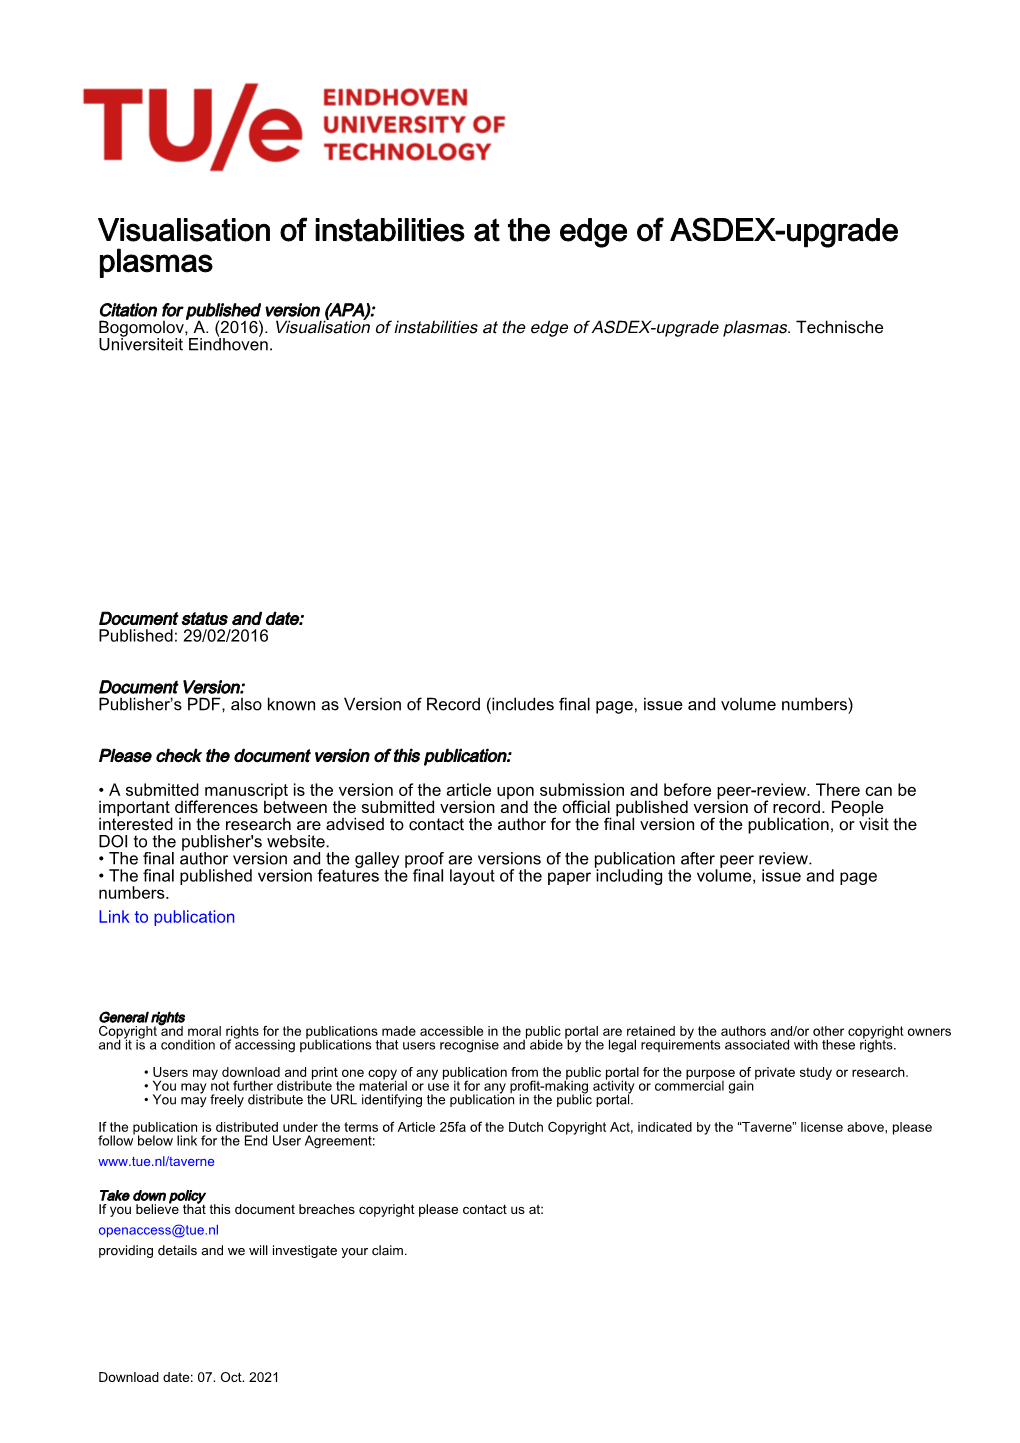 Visualisation of Instabilities at the Edge of ASDEX-Upgrade Plasmas